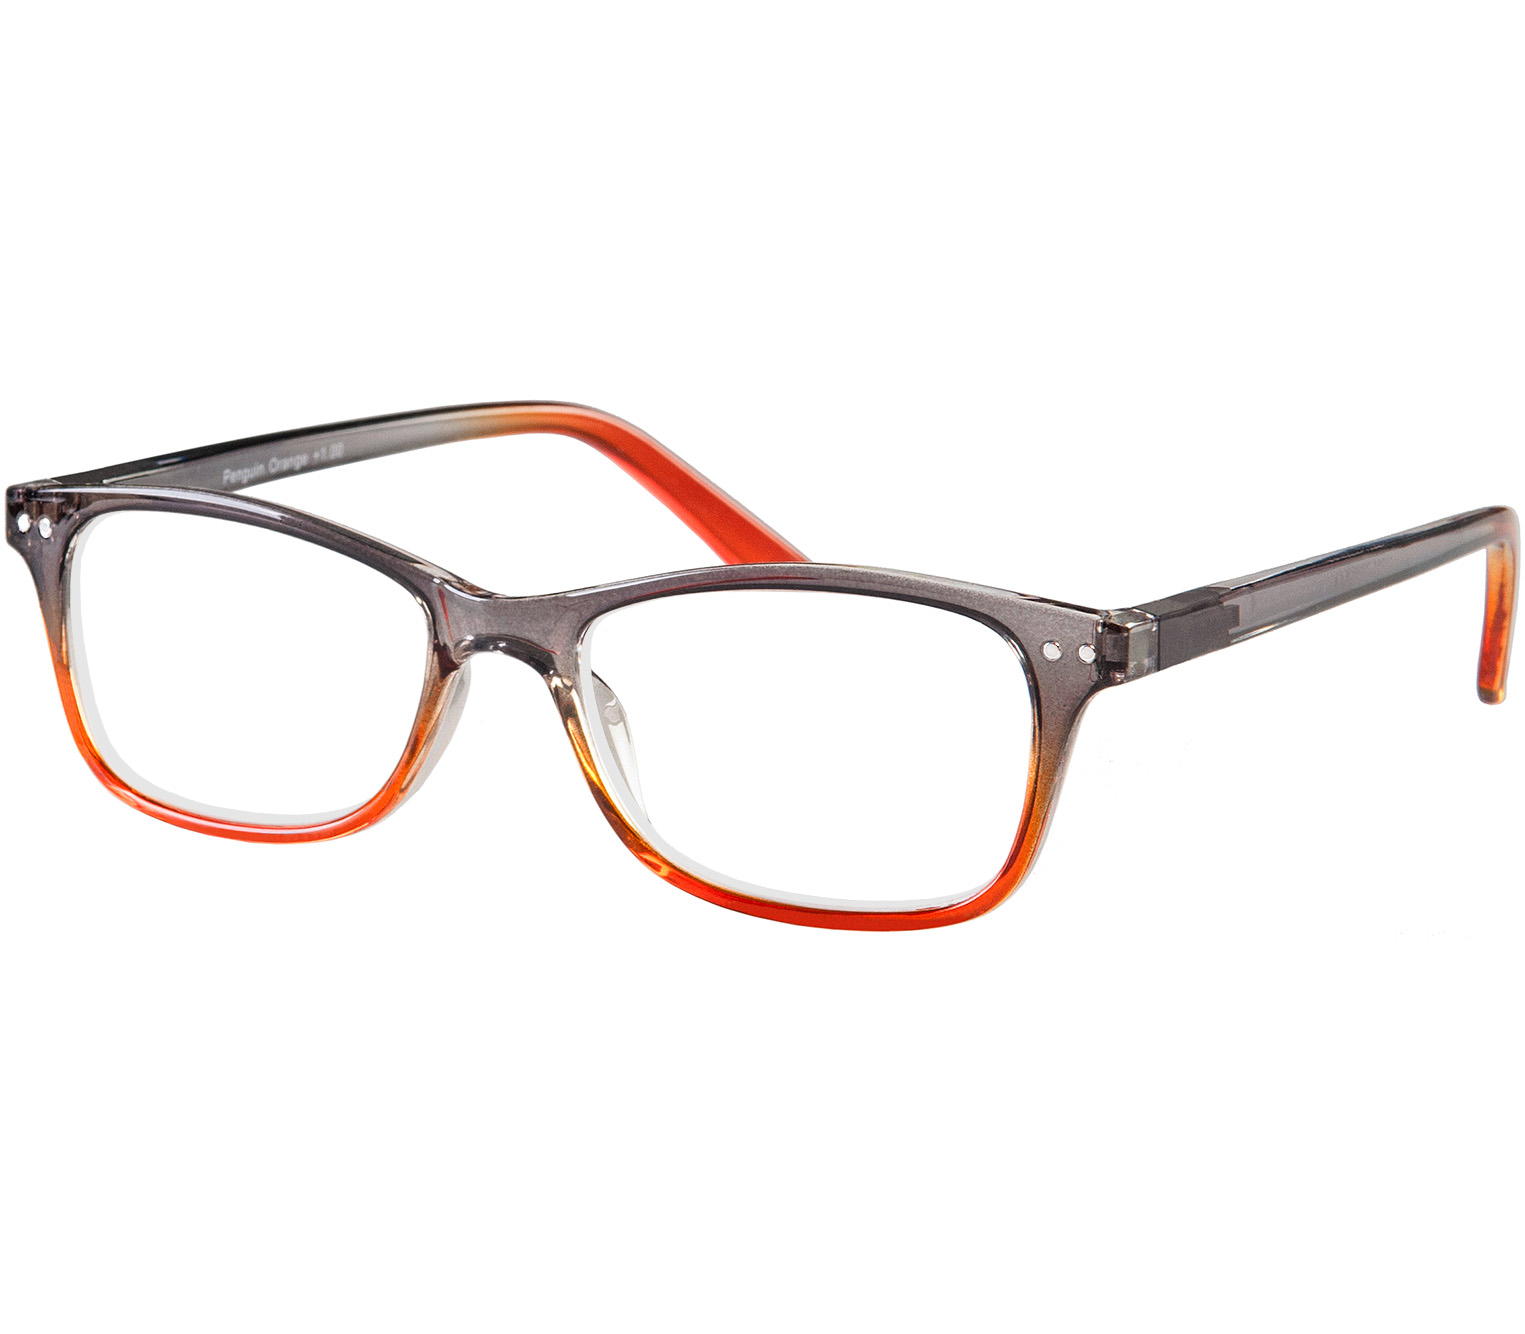 Main Image (Angle) - Penguin (Orange) Classic Reading Glasses